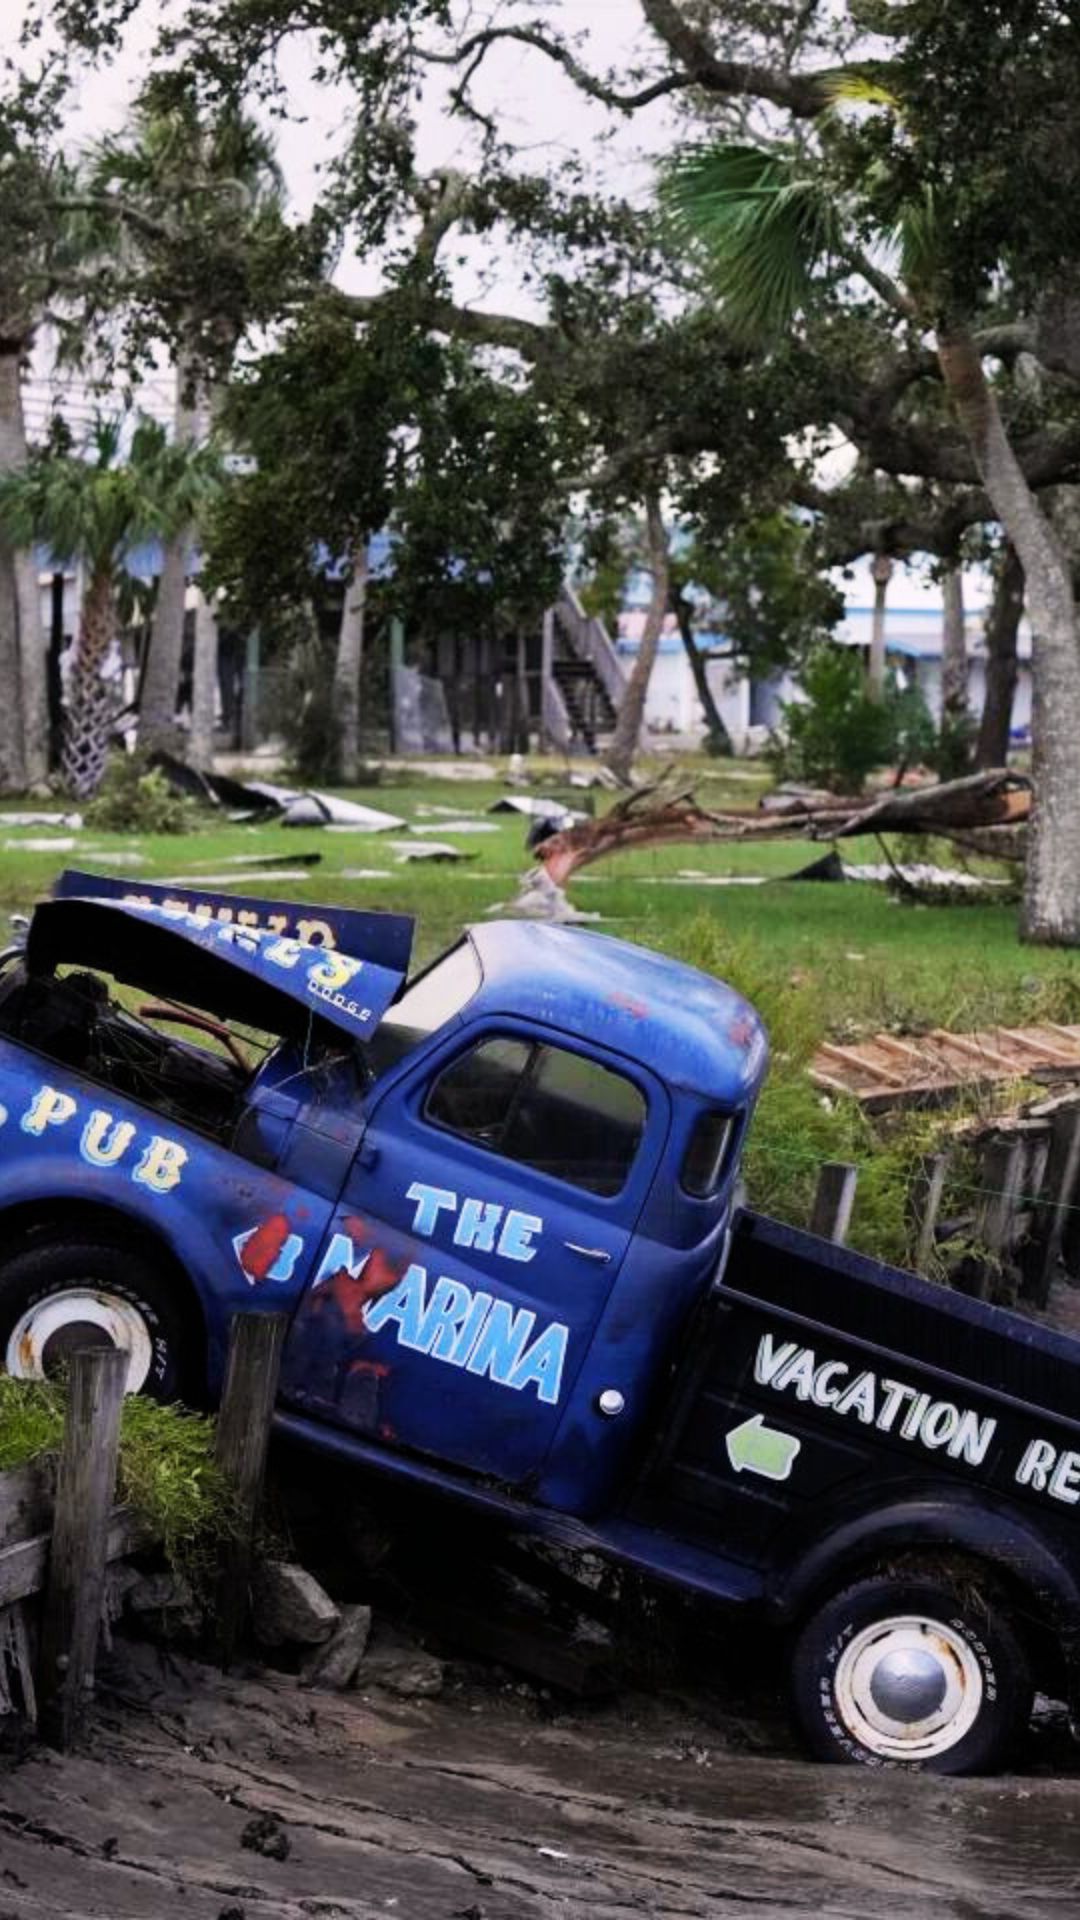 Hurricane Idalia leaves a trail of damage in US's Florida
